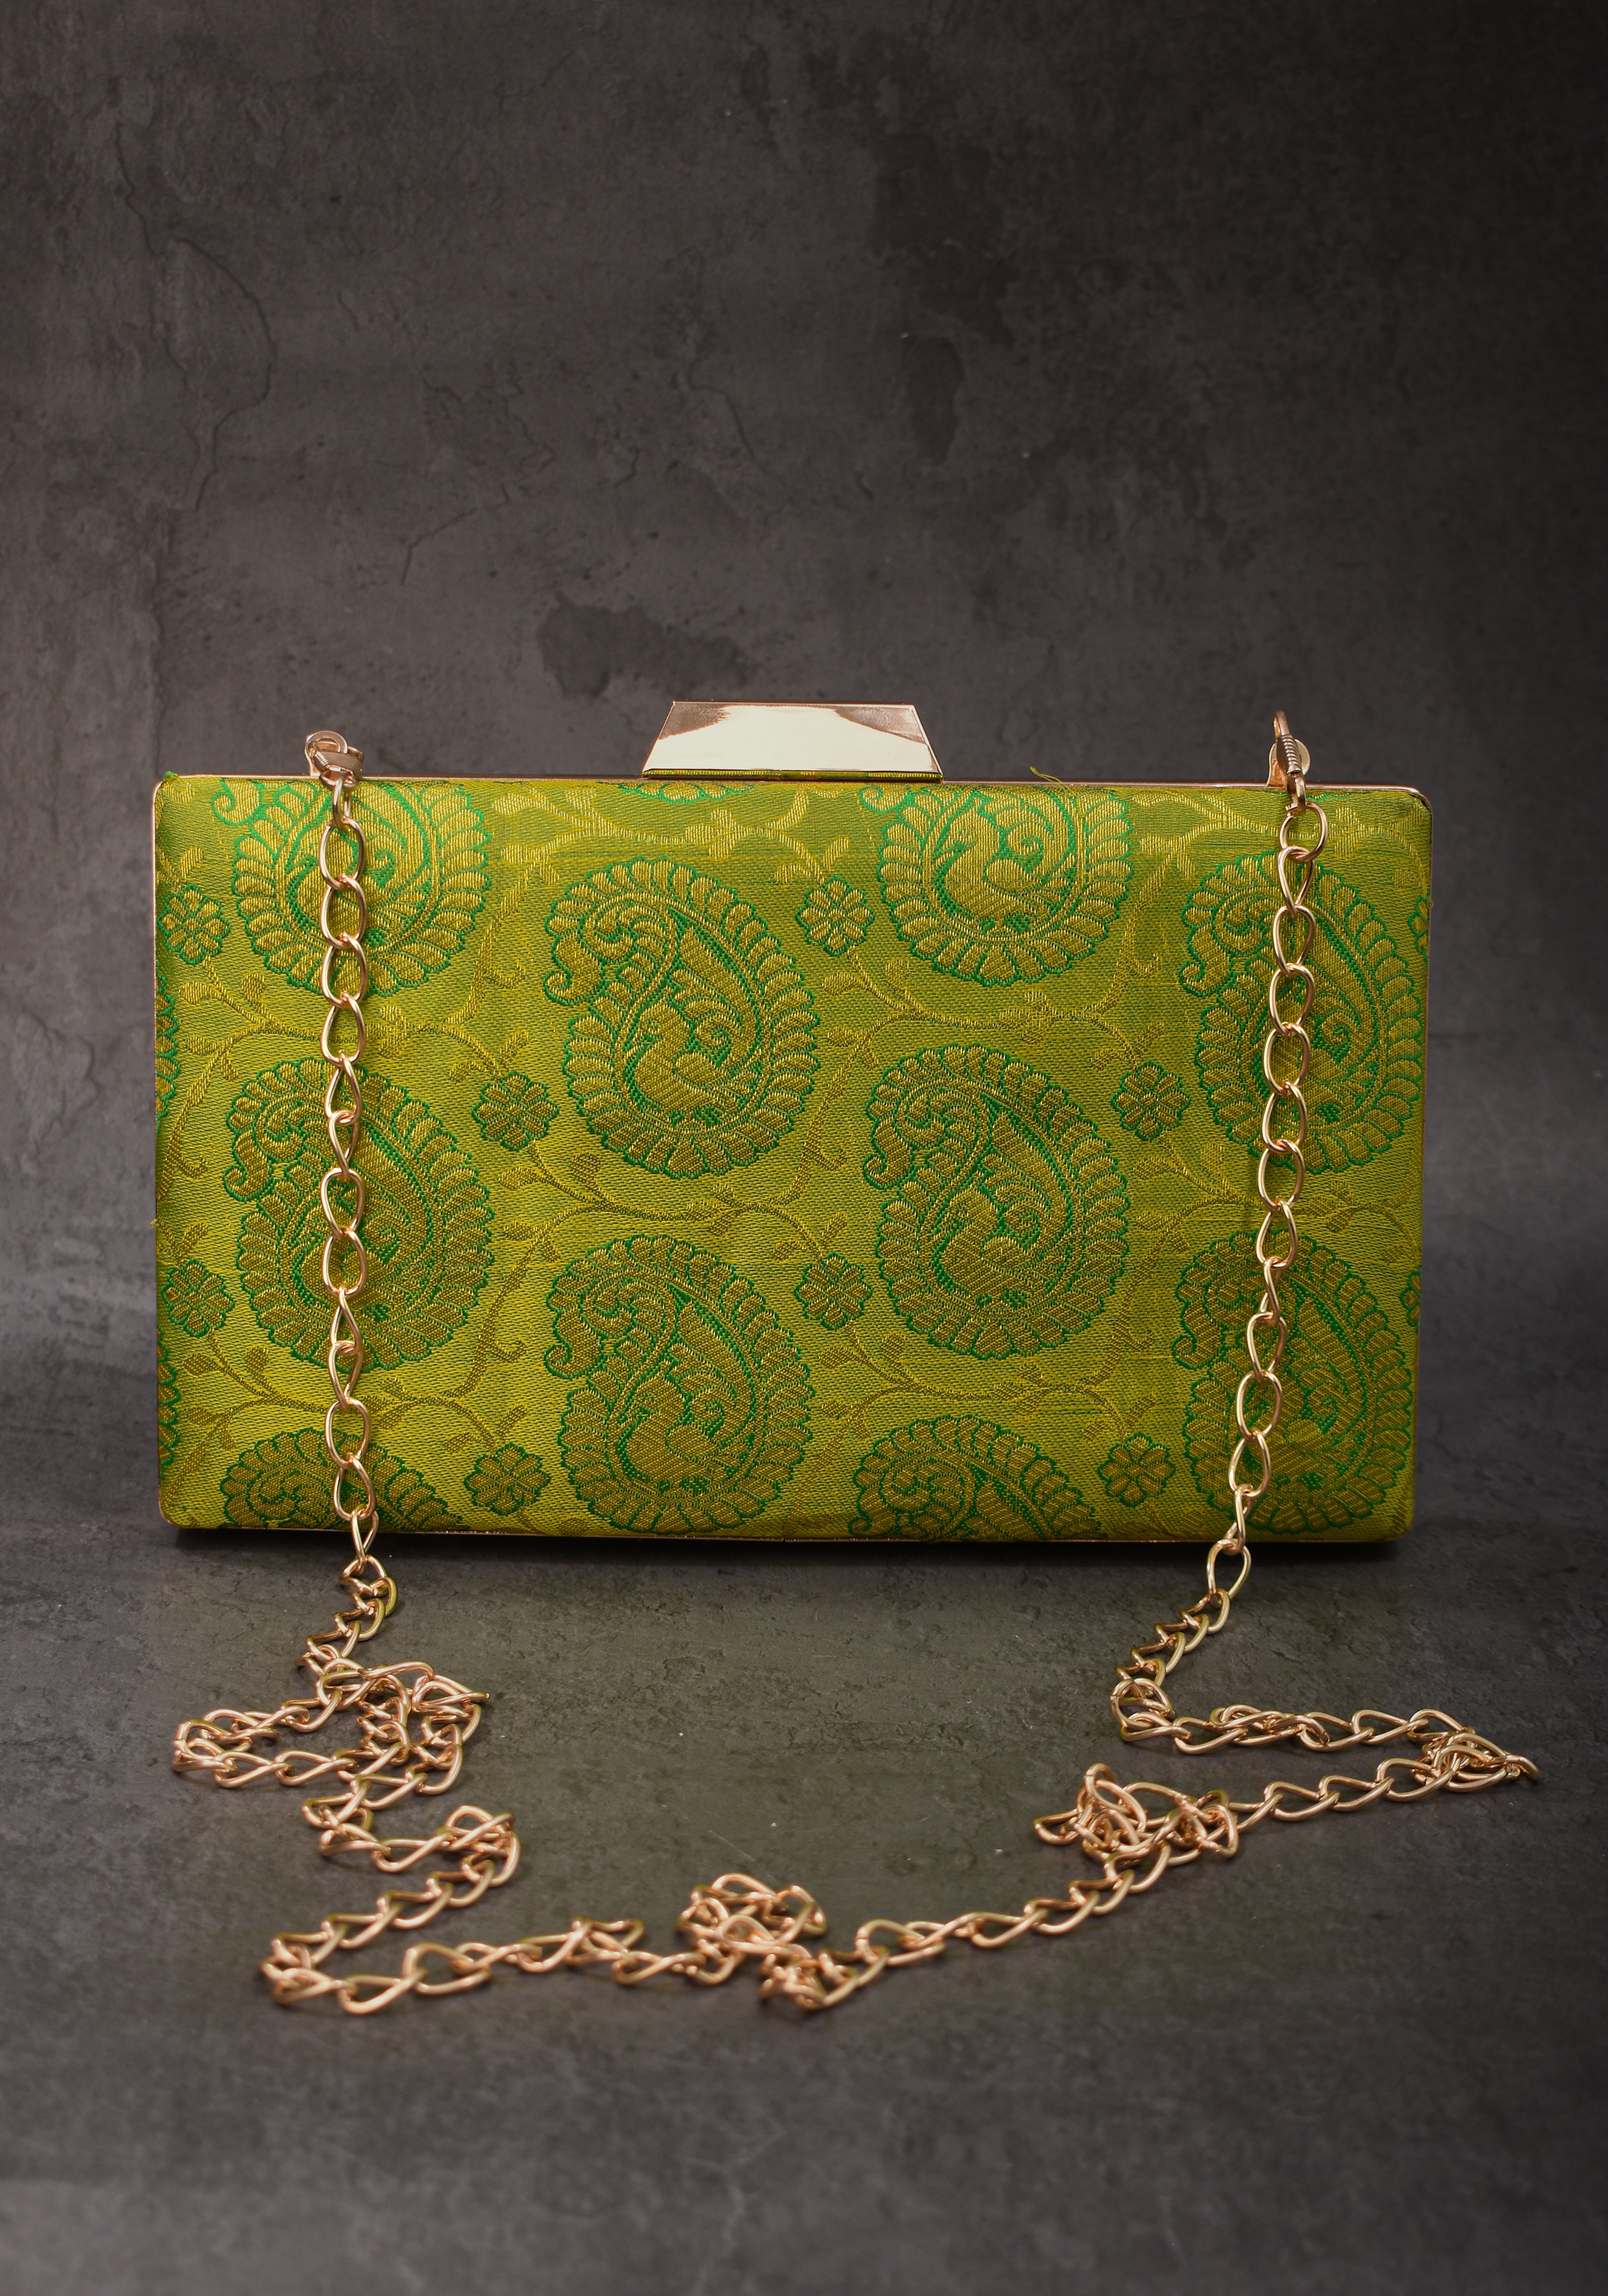 100% Pure Silk Brocade Kanjivaram Clutch in Lime Green Paisley Design